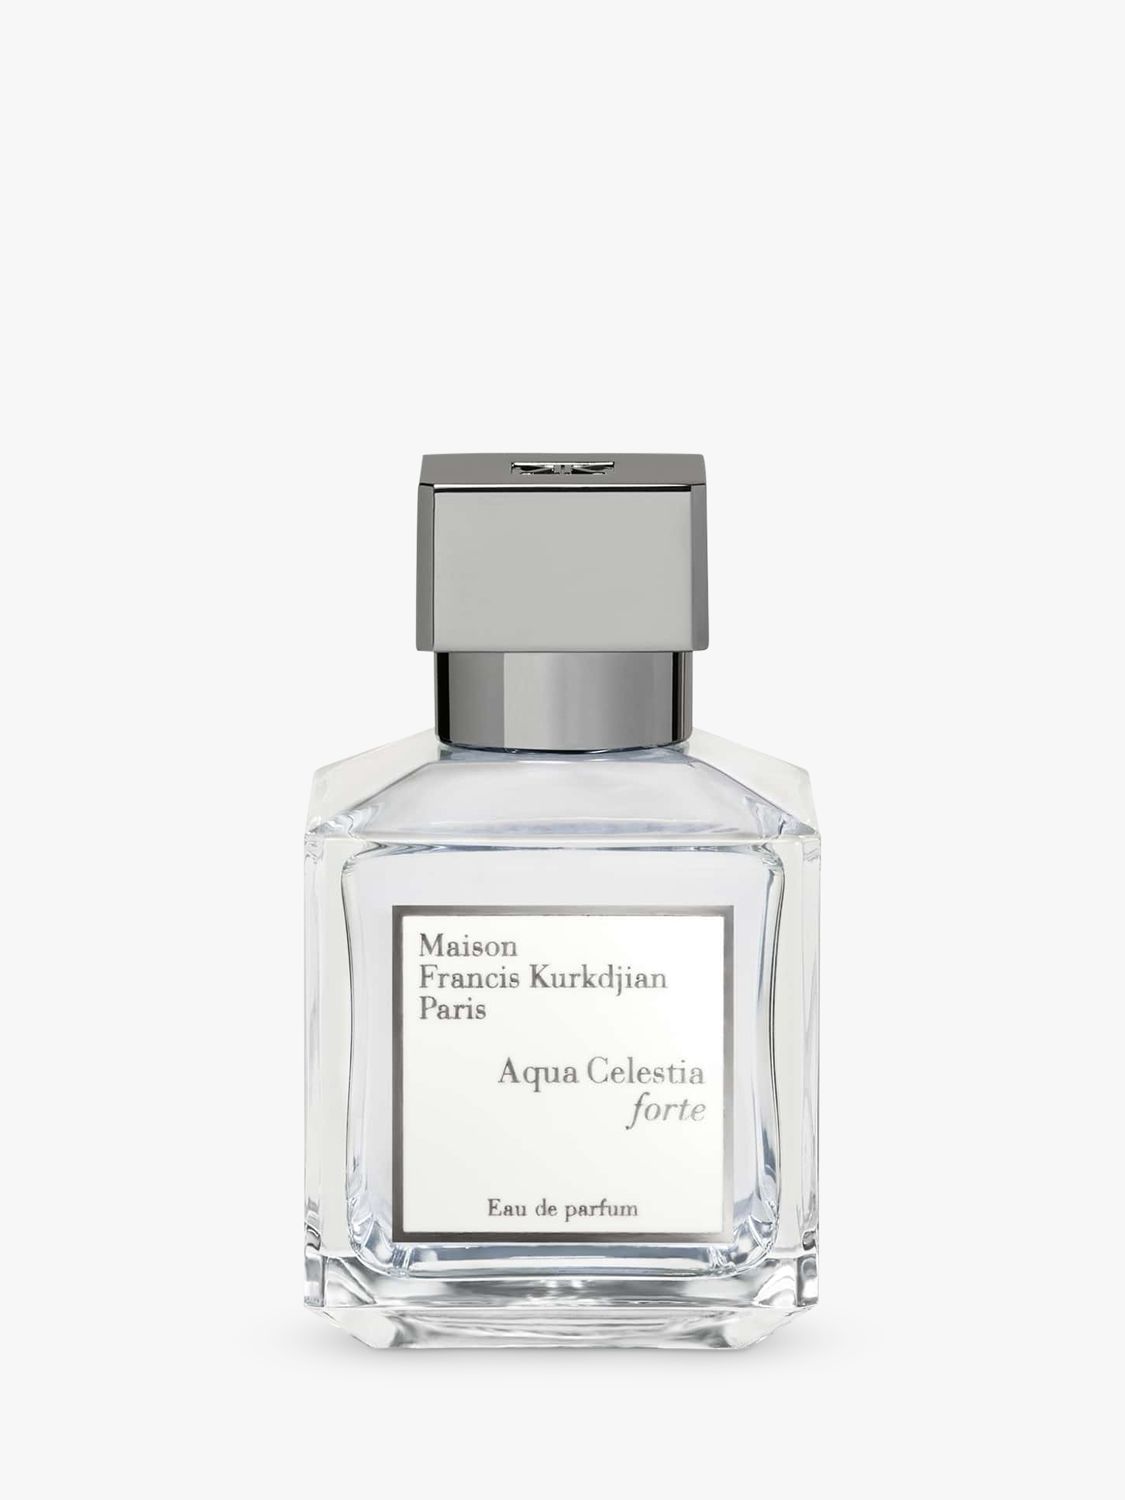 Maison Francis Kurkdjian Aqua Celestia Forte Eau de Parfum, 70ml 3